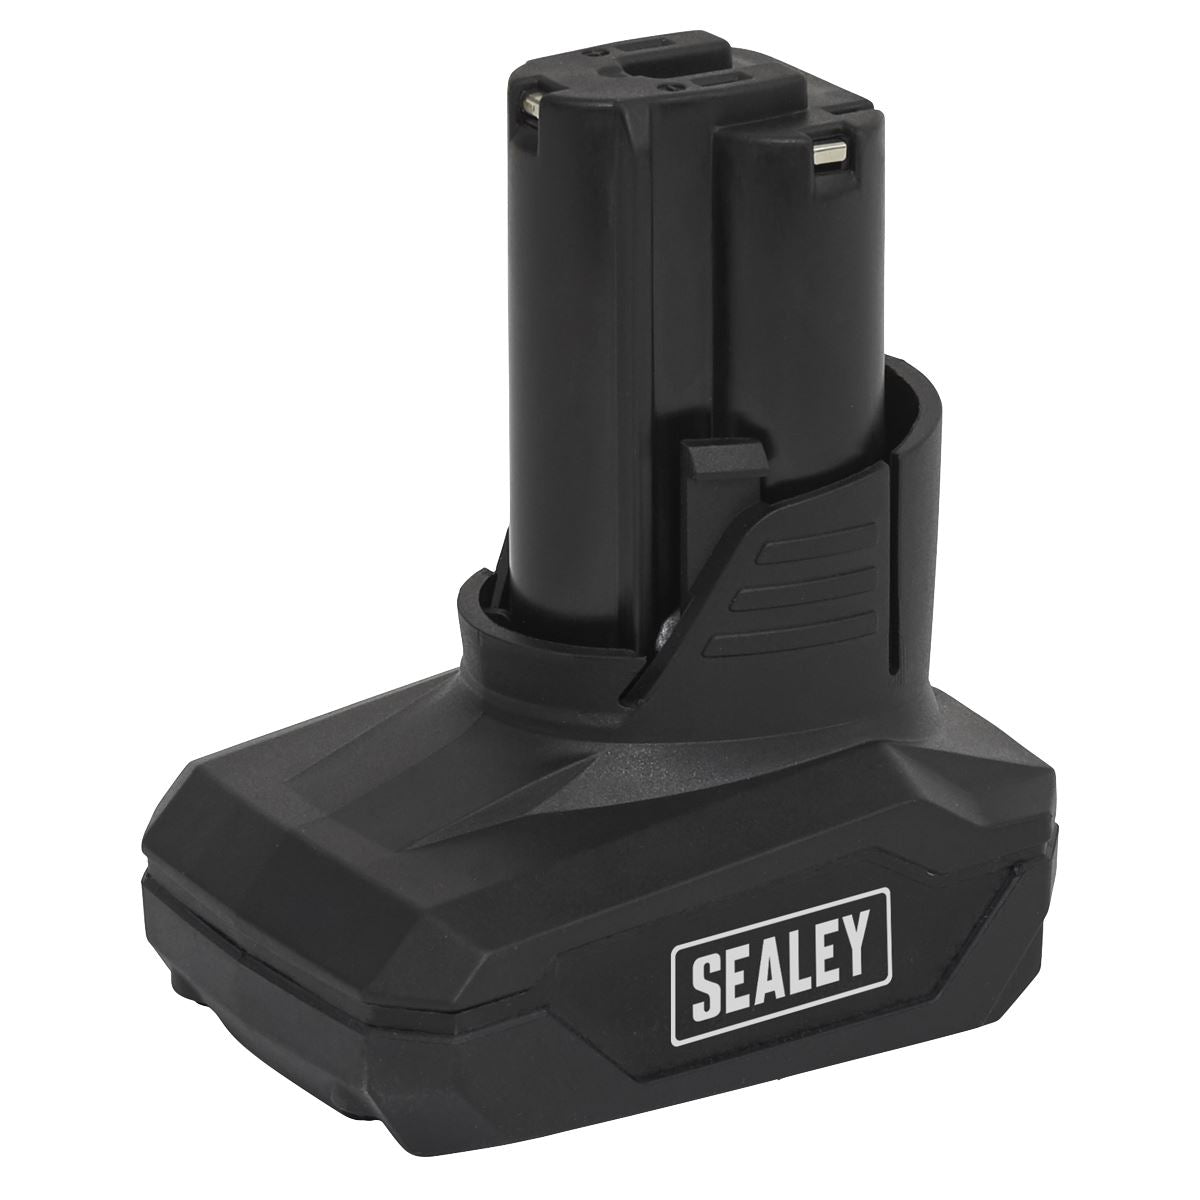 Sealey 4 x 12V SV12 Series Cordless Power Tool Combo Kit